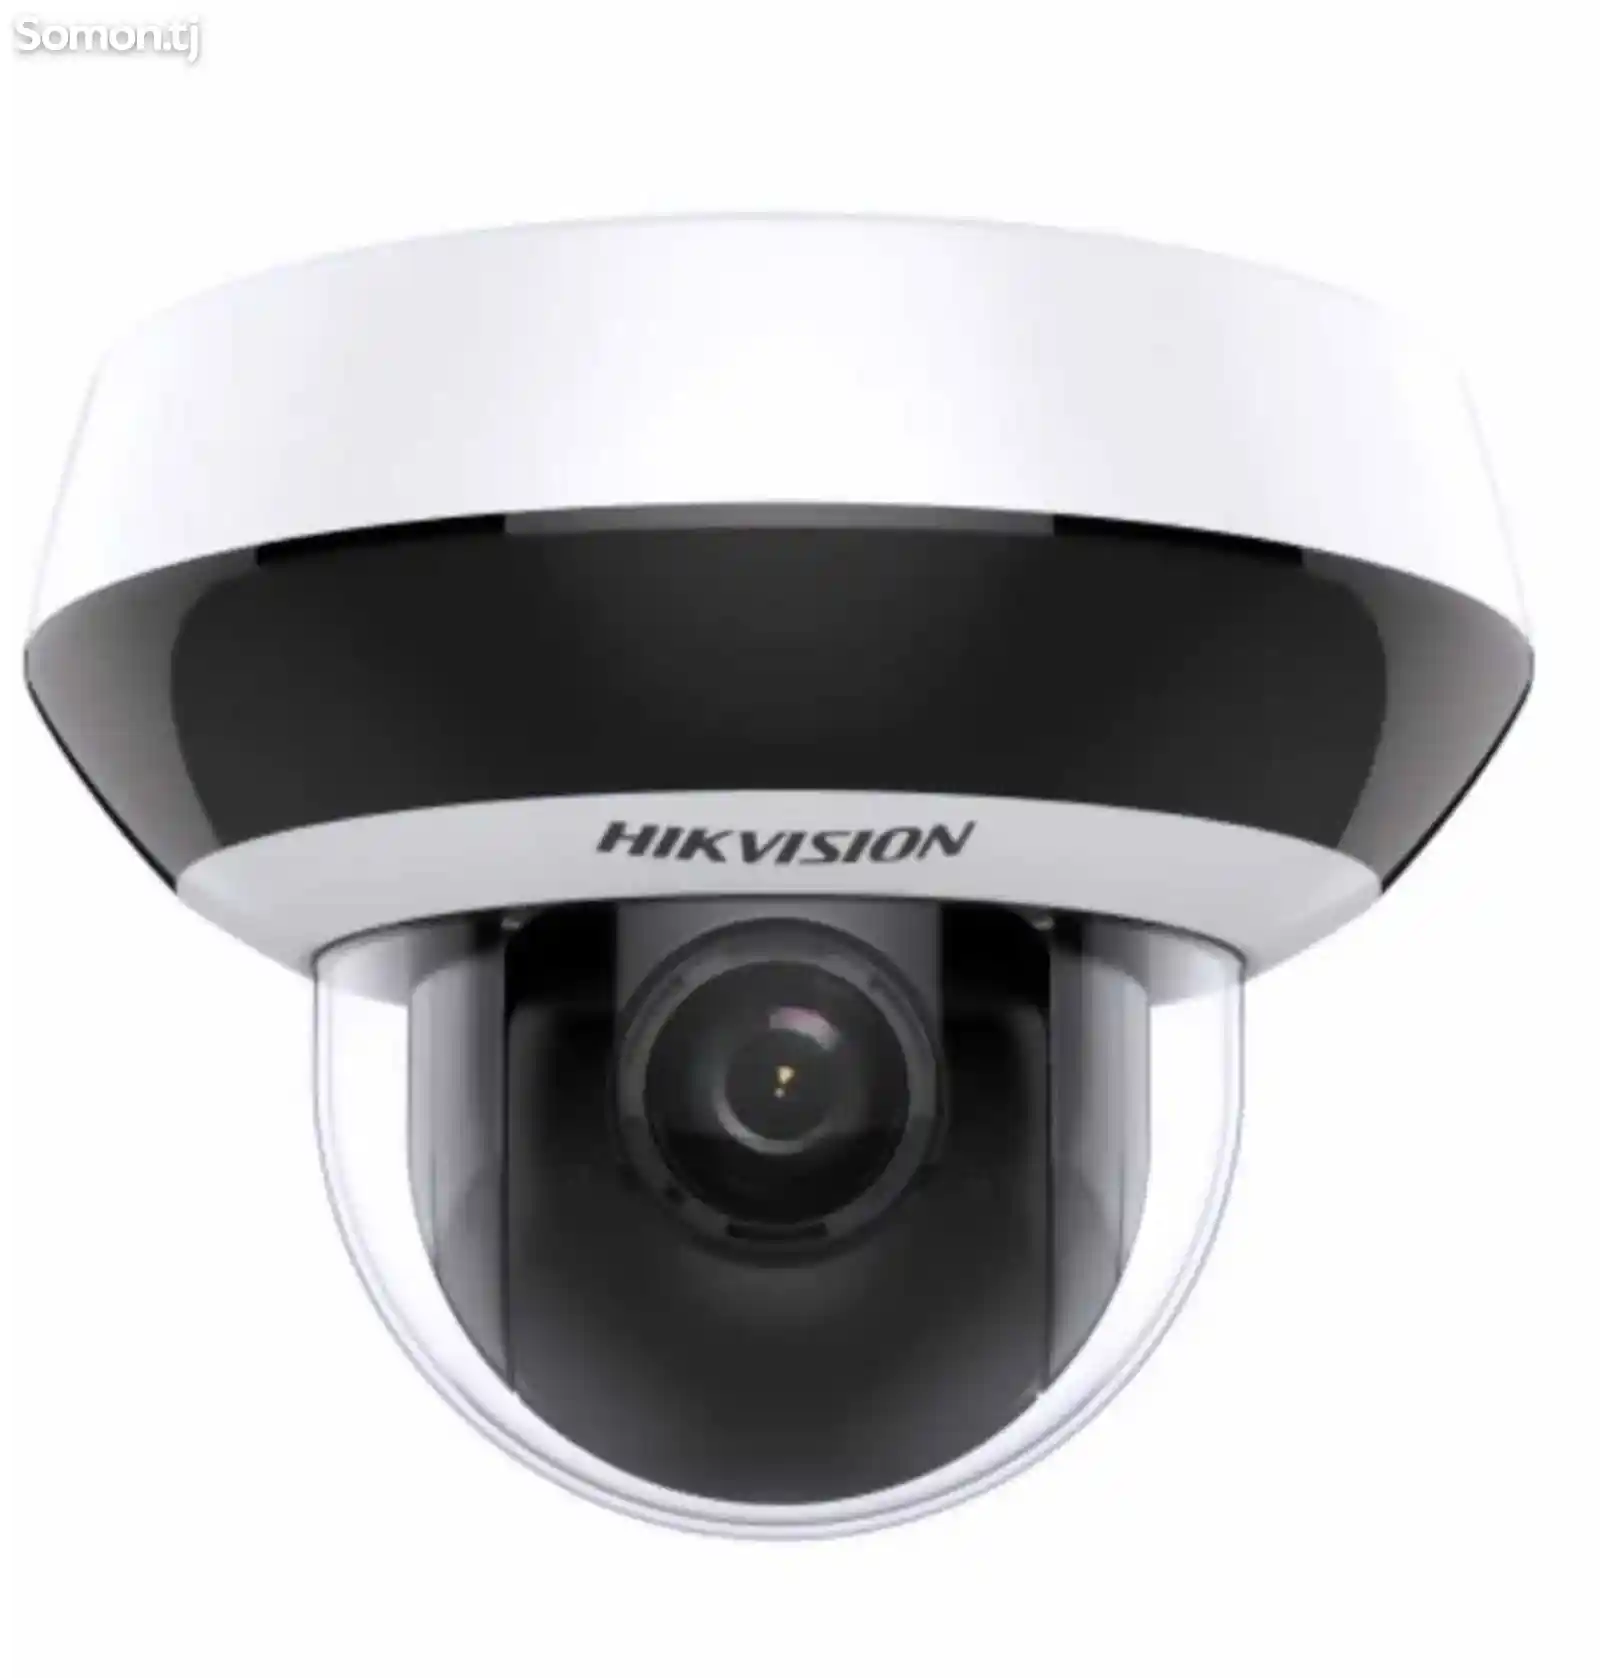 IP камера Hikvision